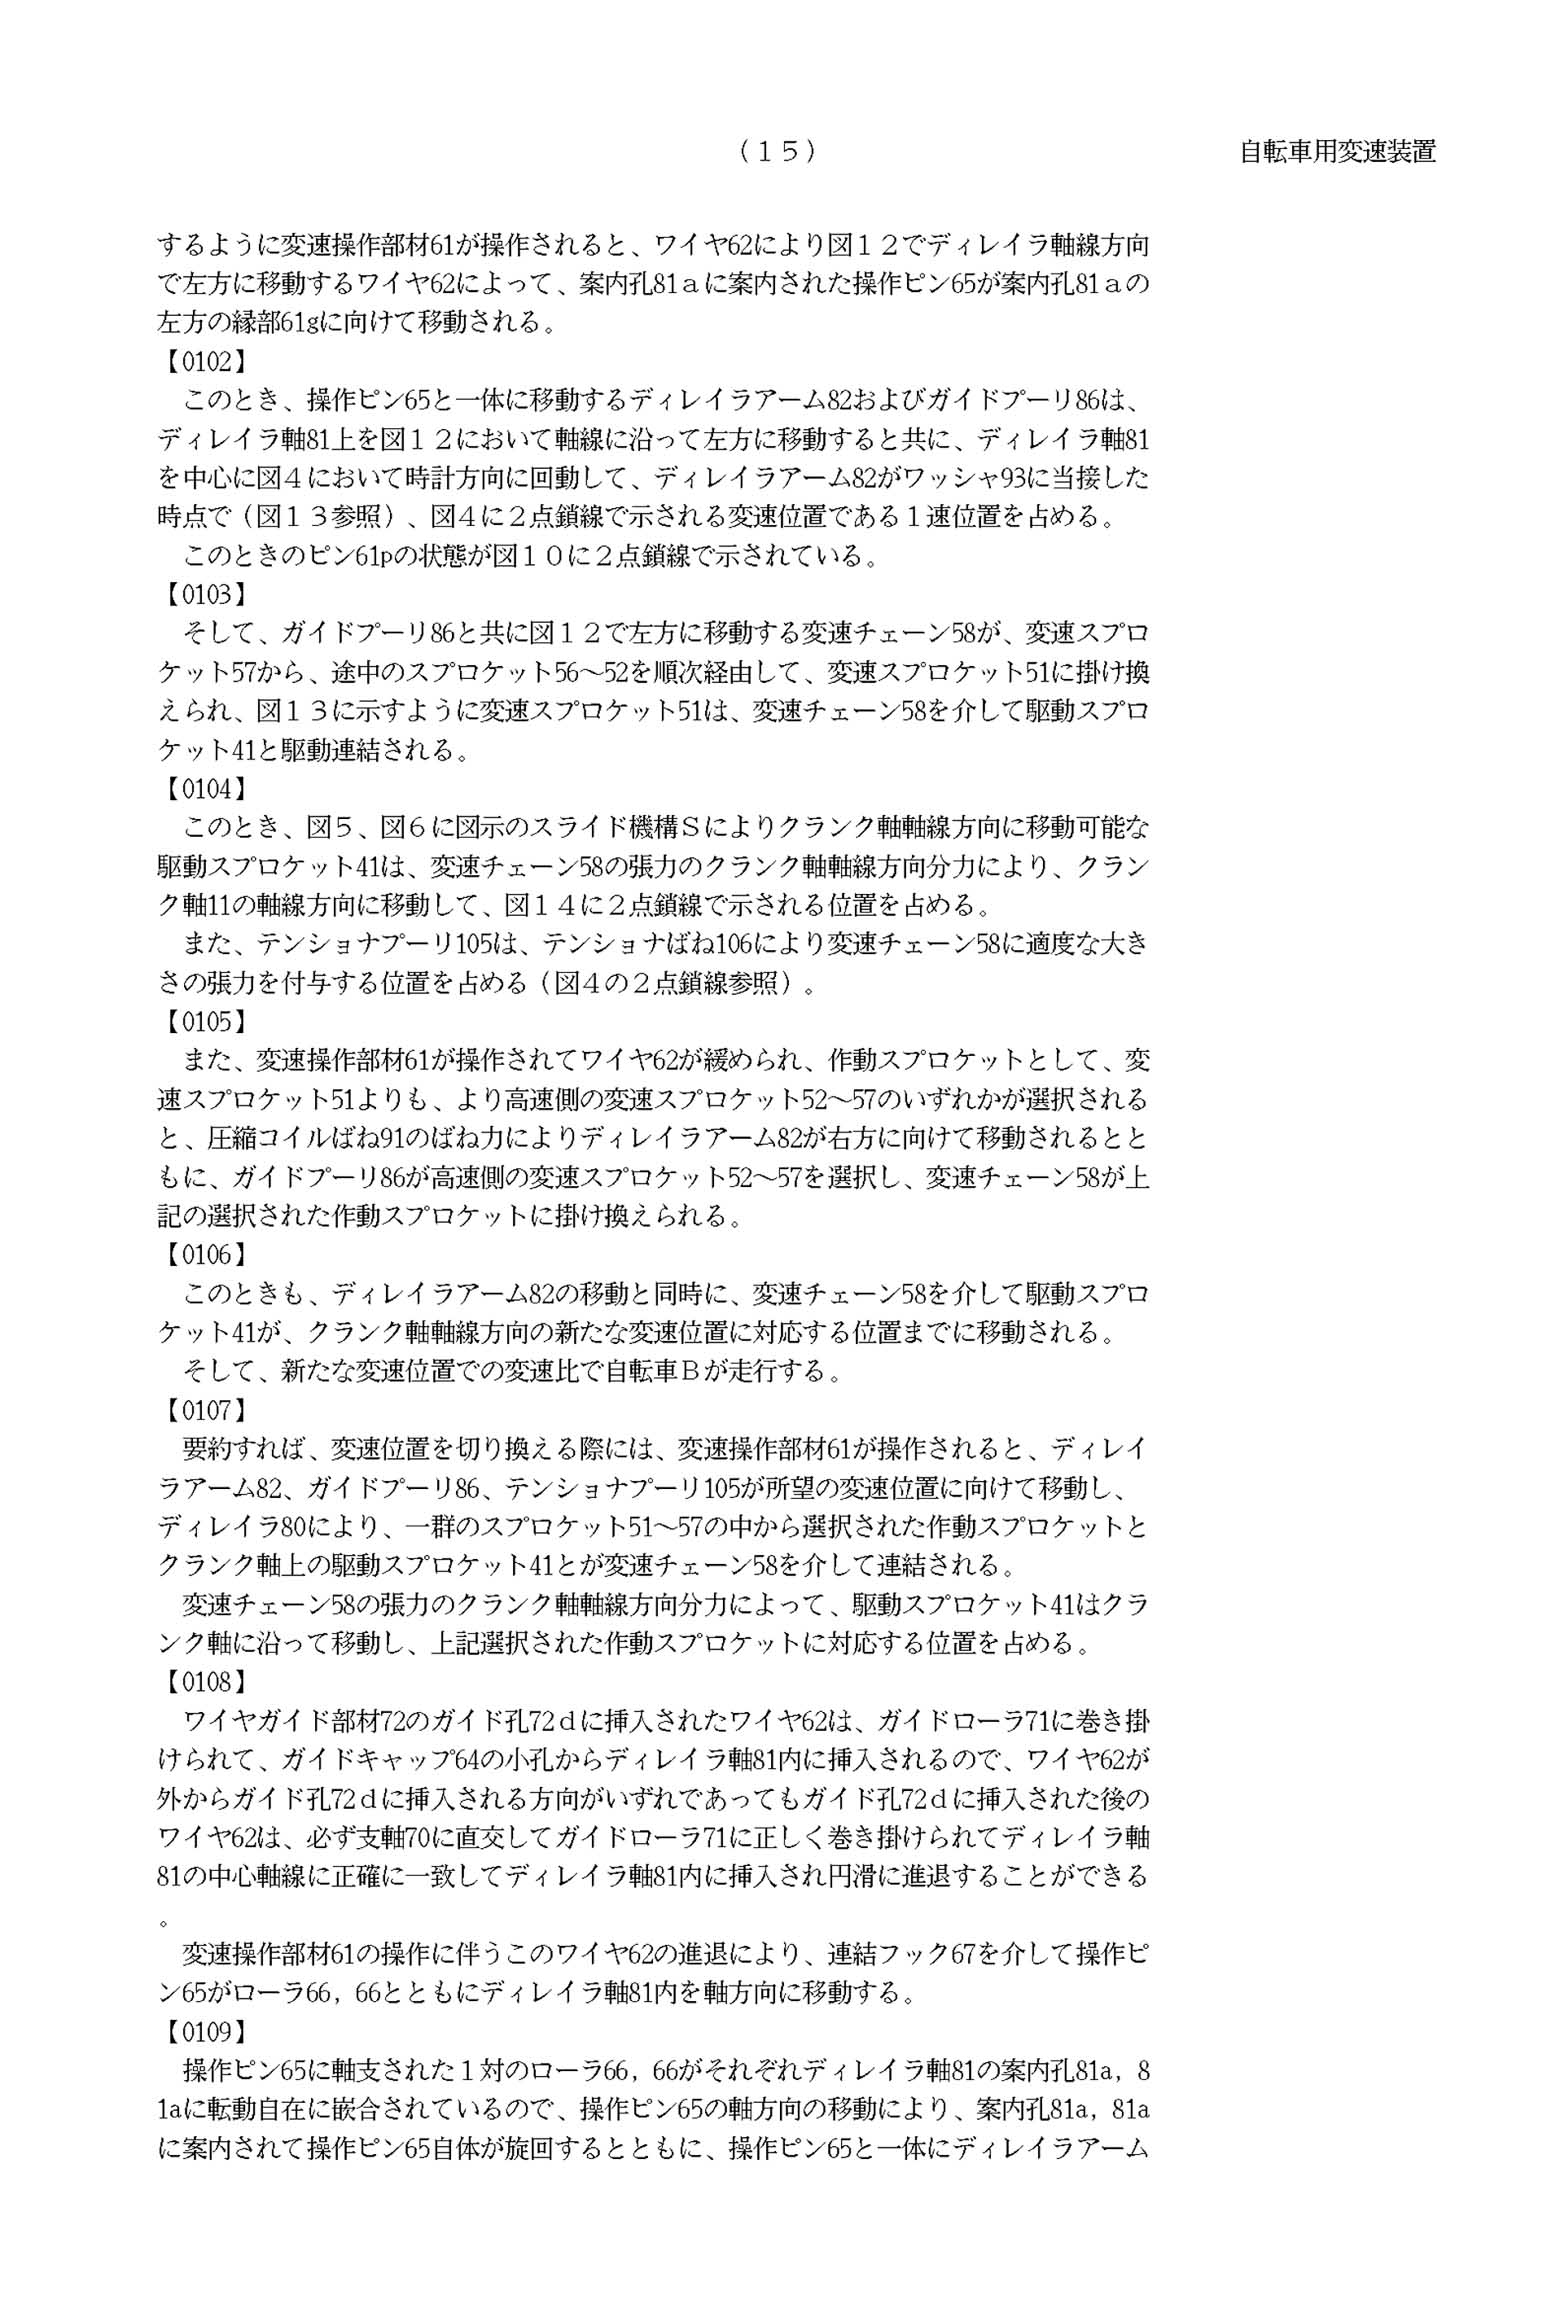 Japanese Patent 4286681 - Honda page 15 main image